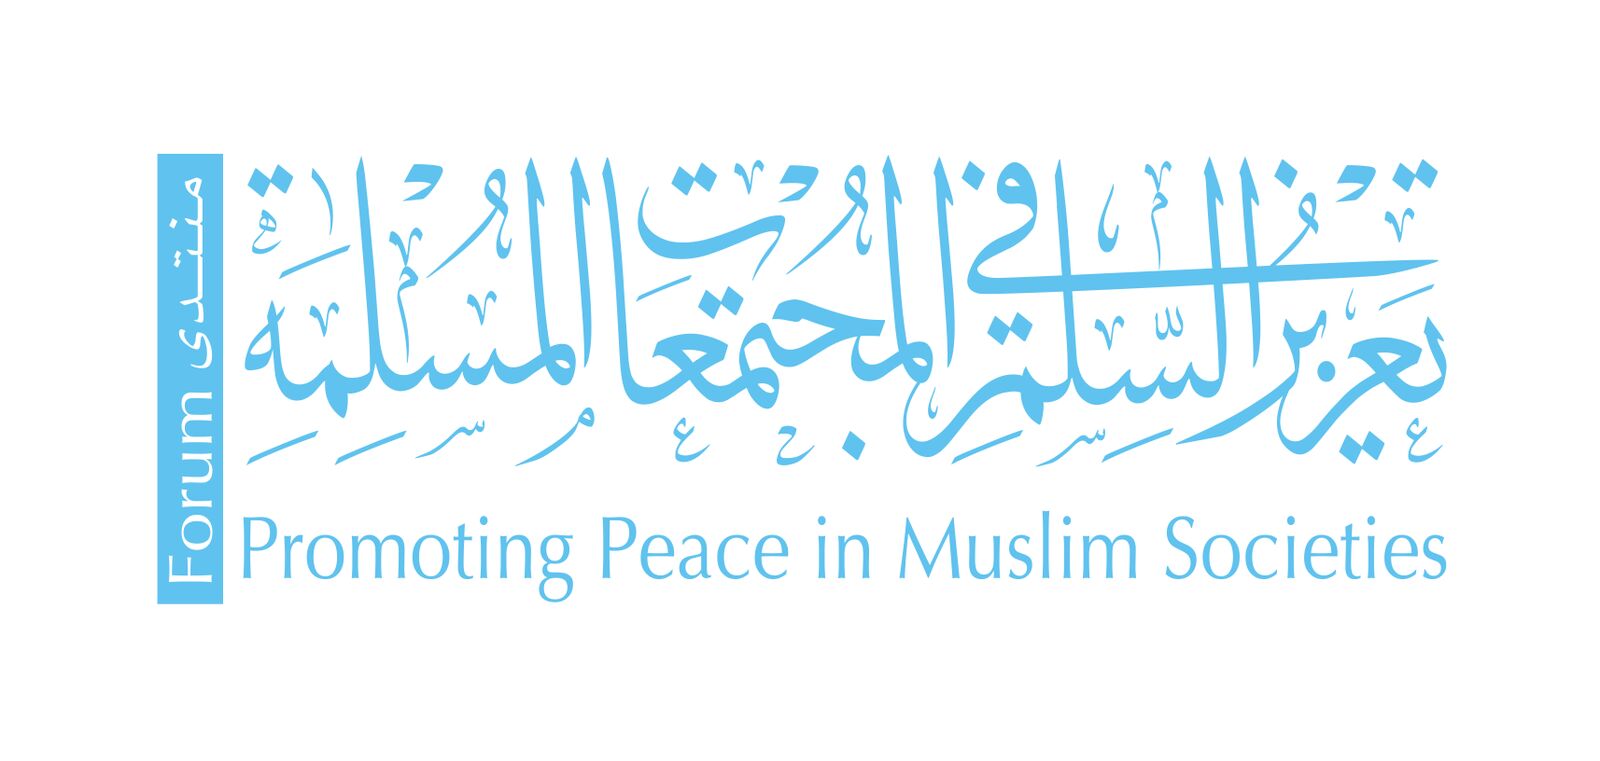 4th Forum for Promoting Peace in Muslim Societies - December 2017